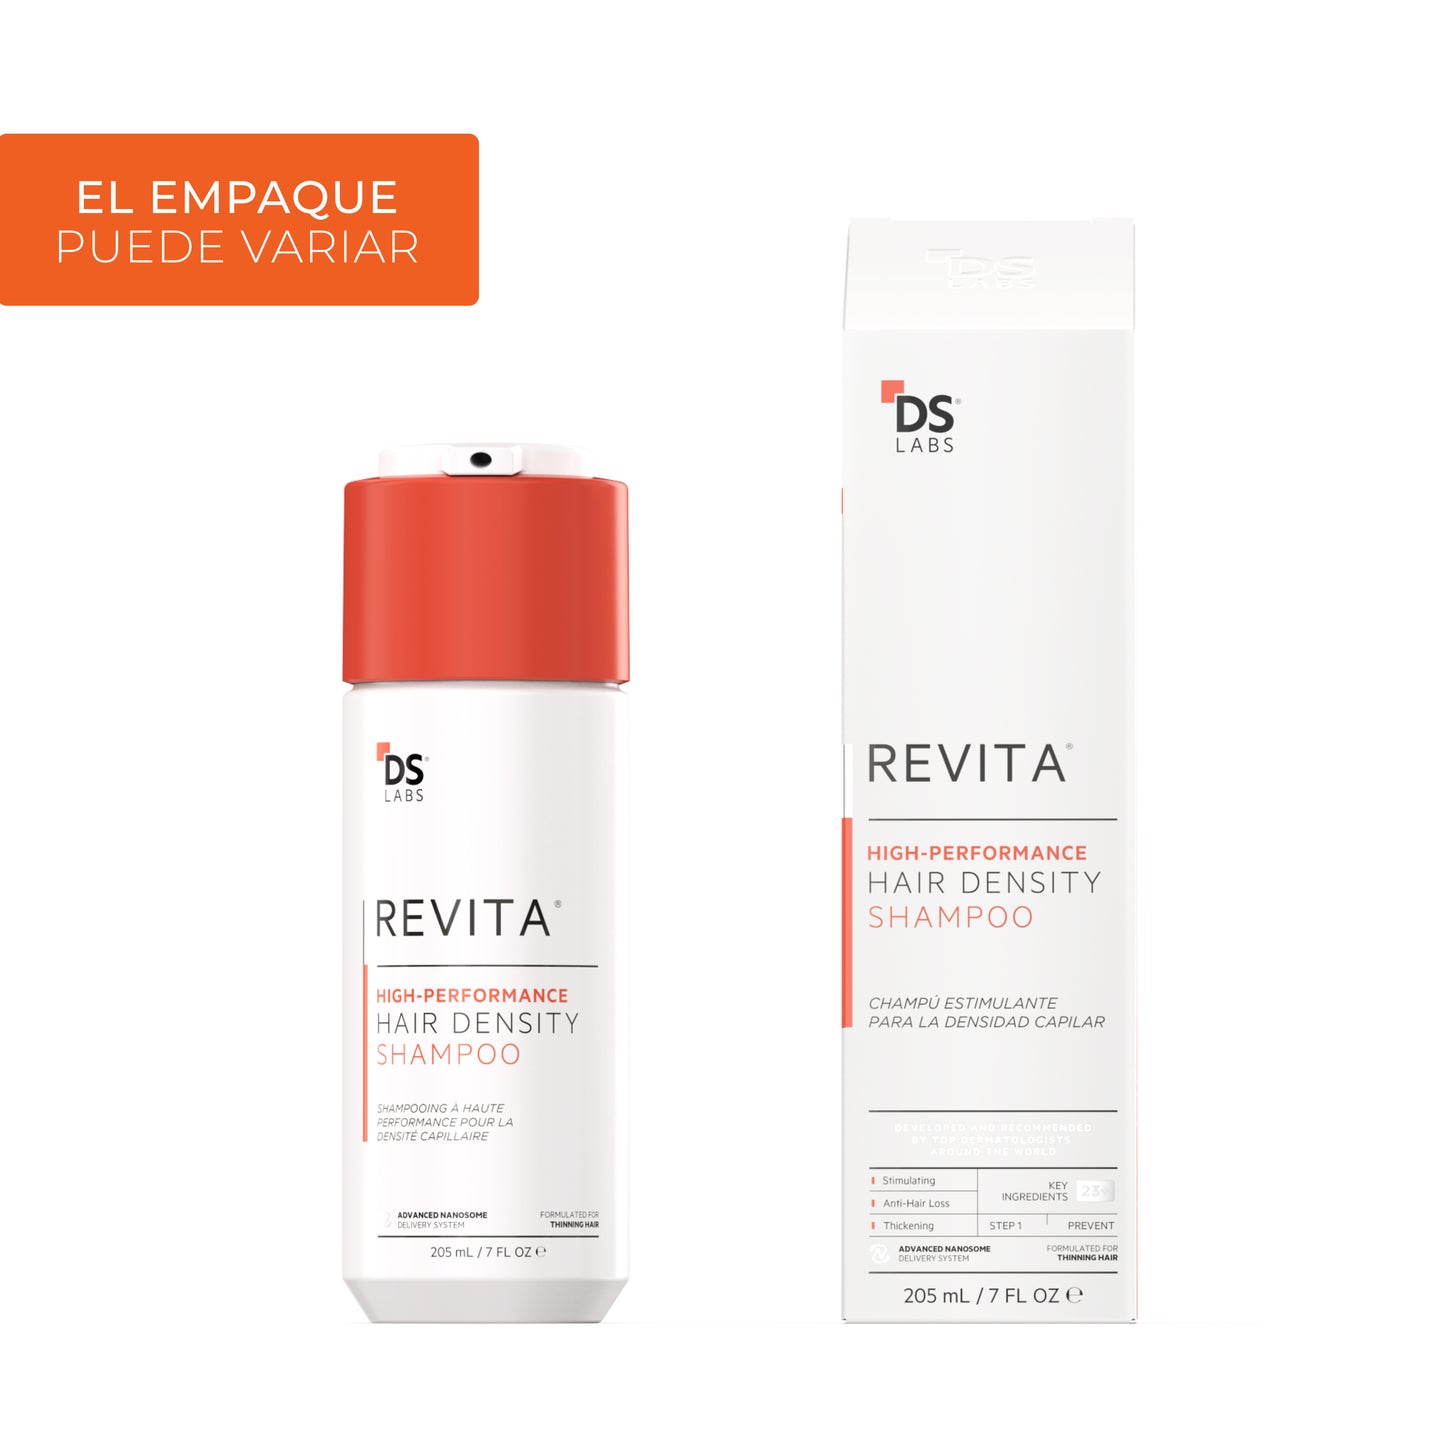 Revita® 205ML | Shampoo Estimulante para la Densidad Capilar